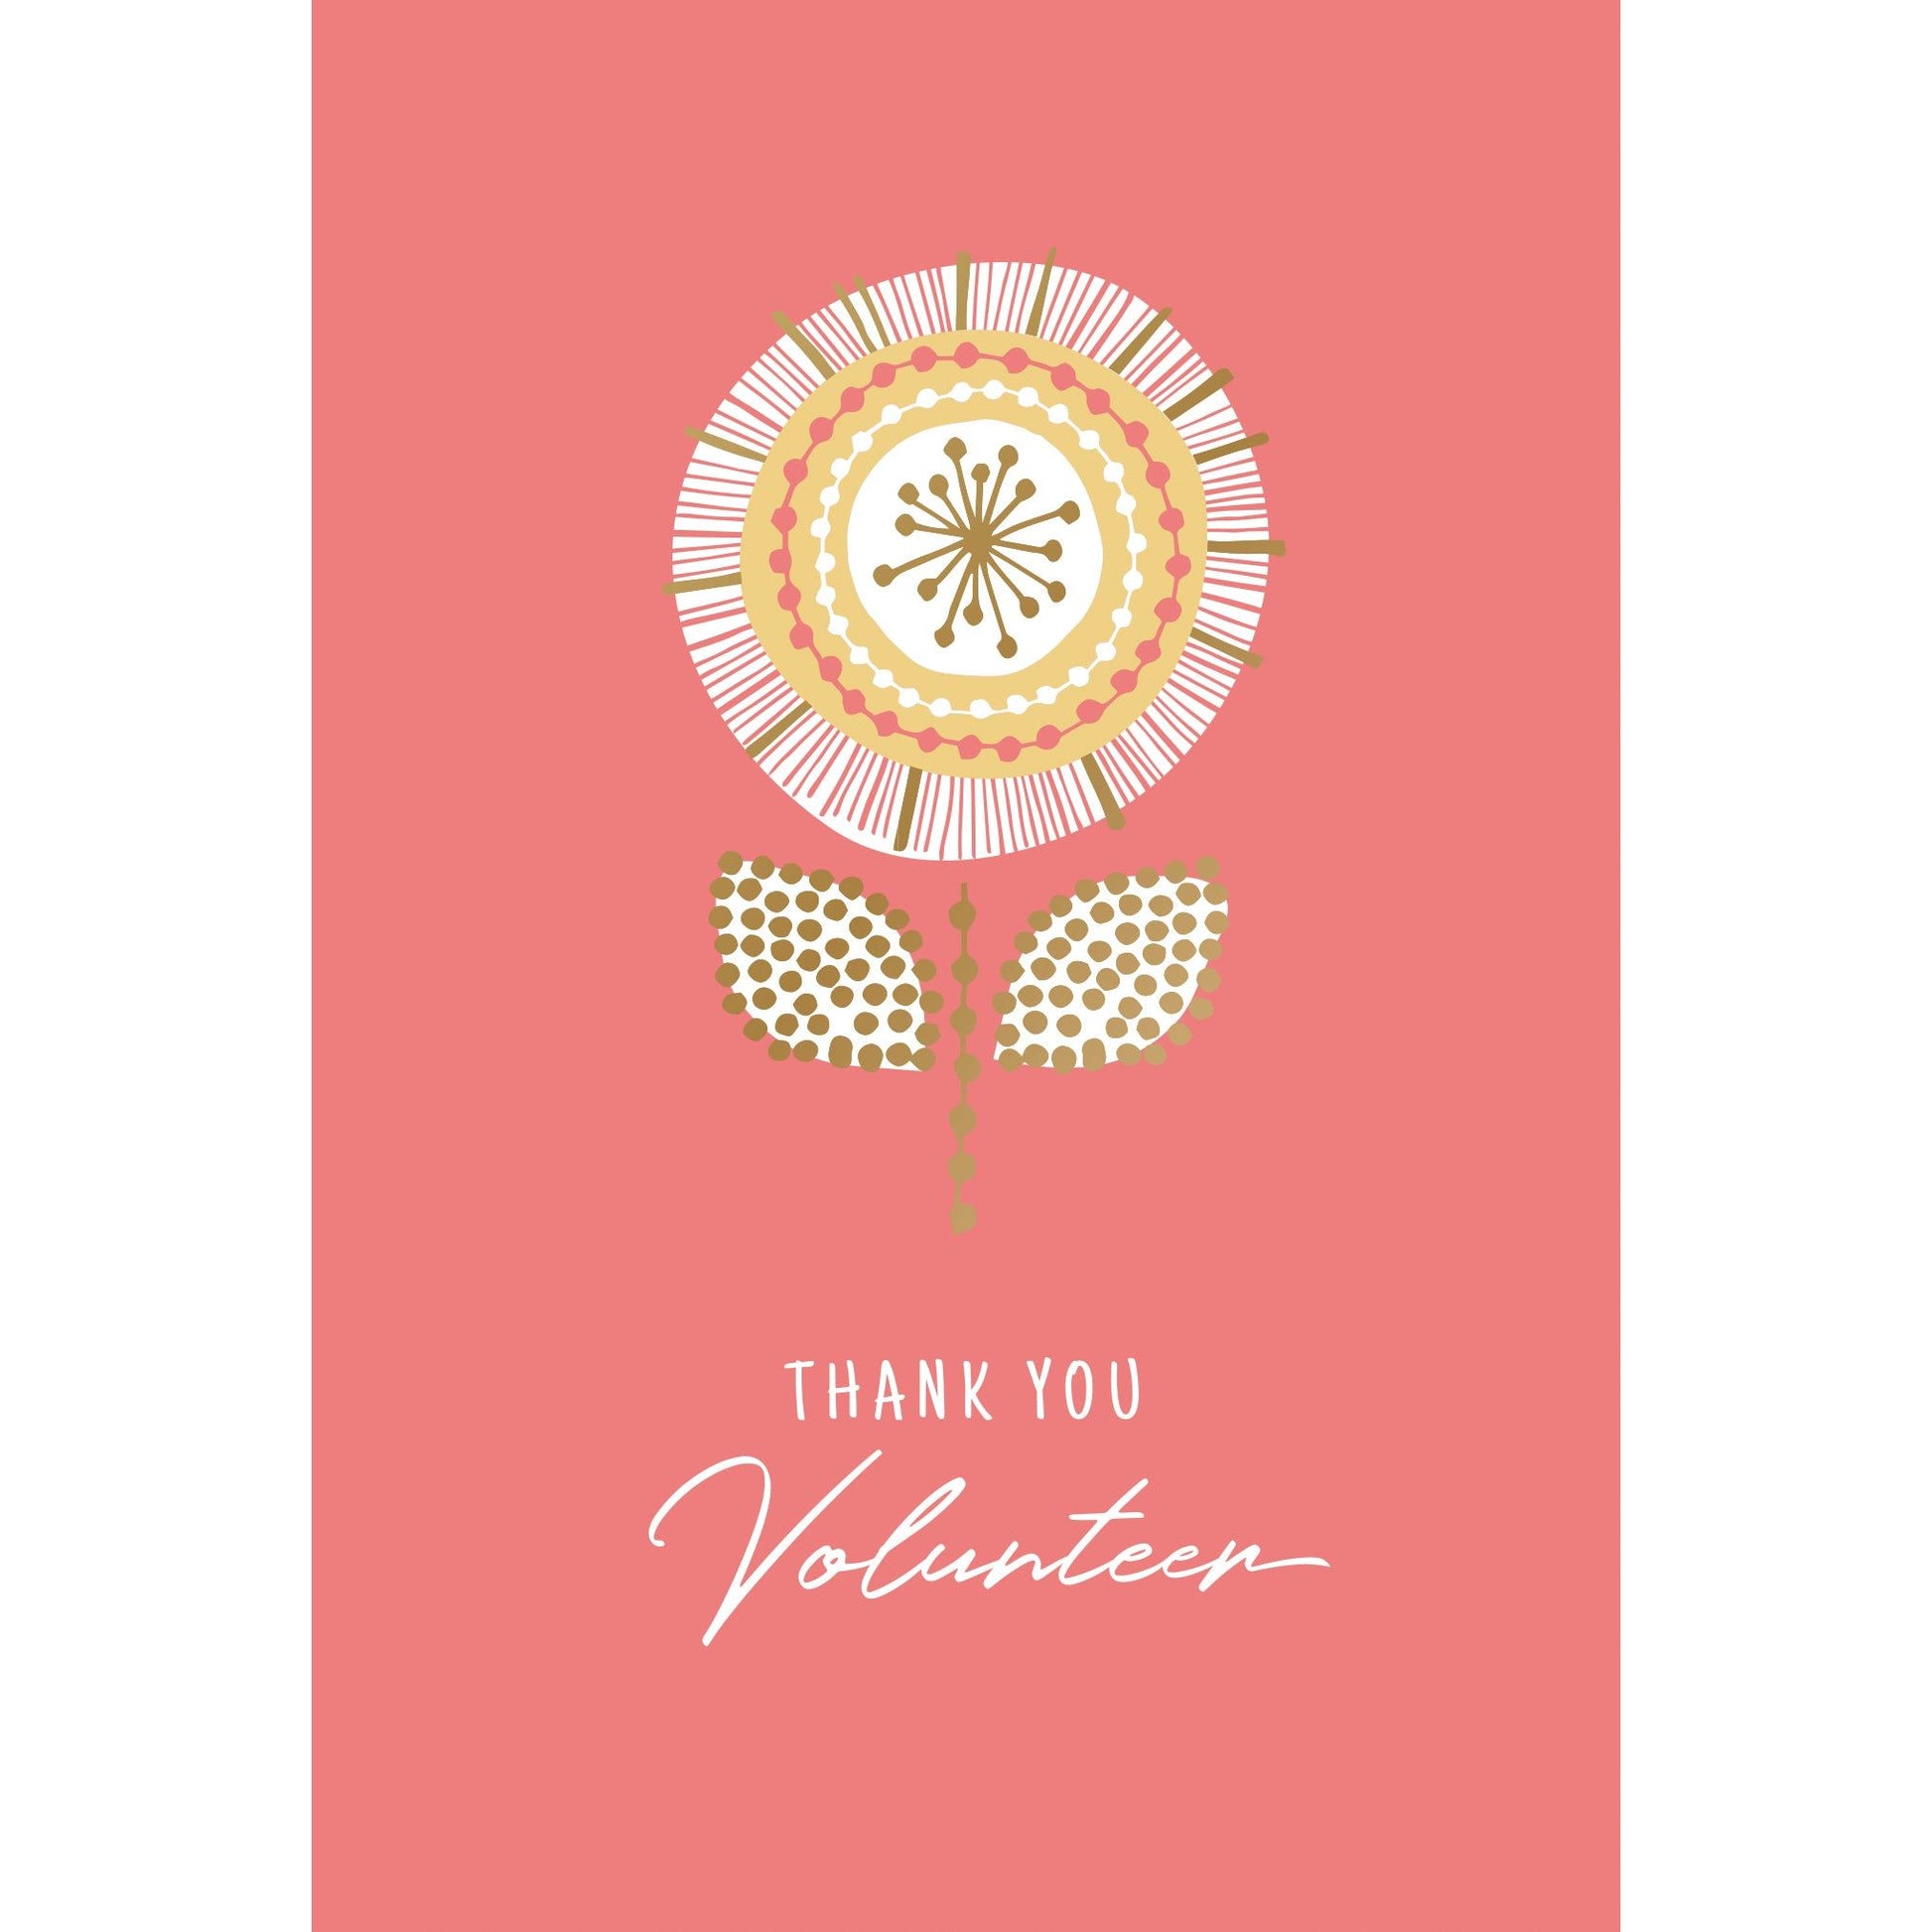 Thank You Volunteer Card Sunburst Flower - Cardmore